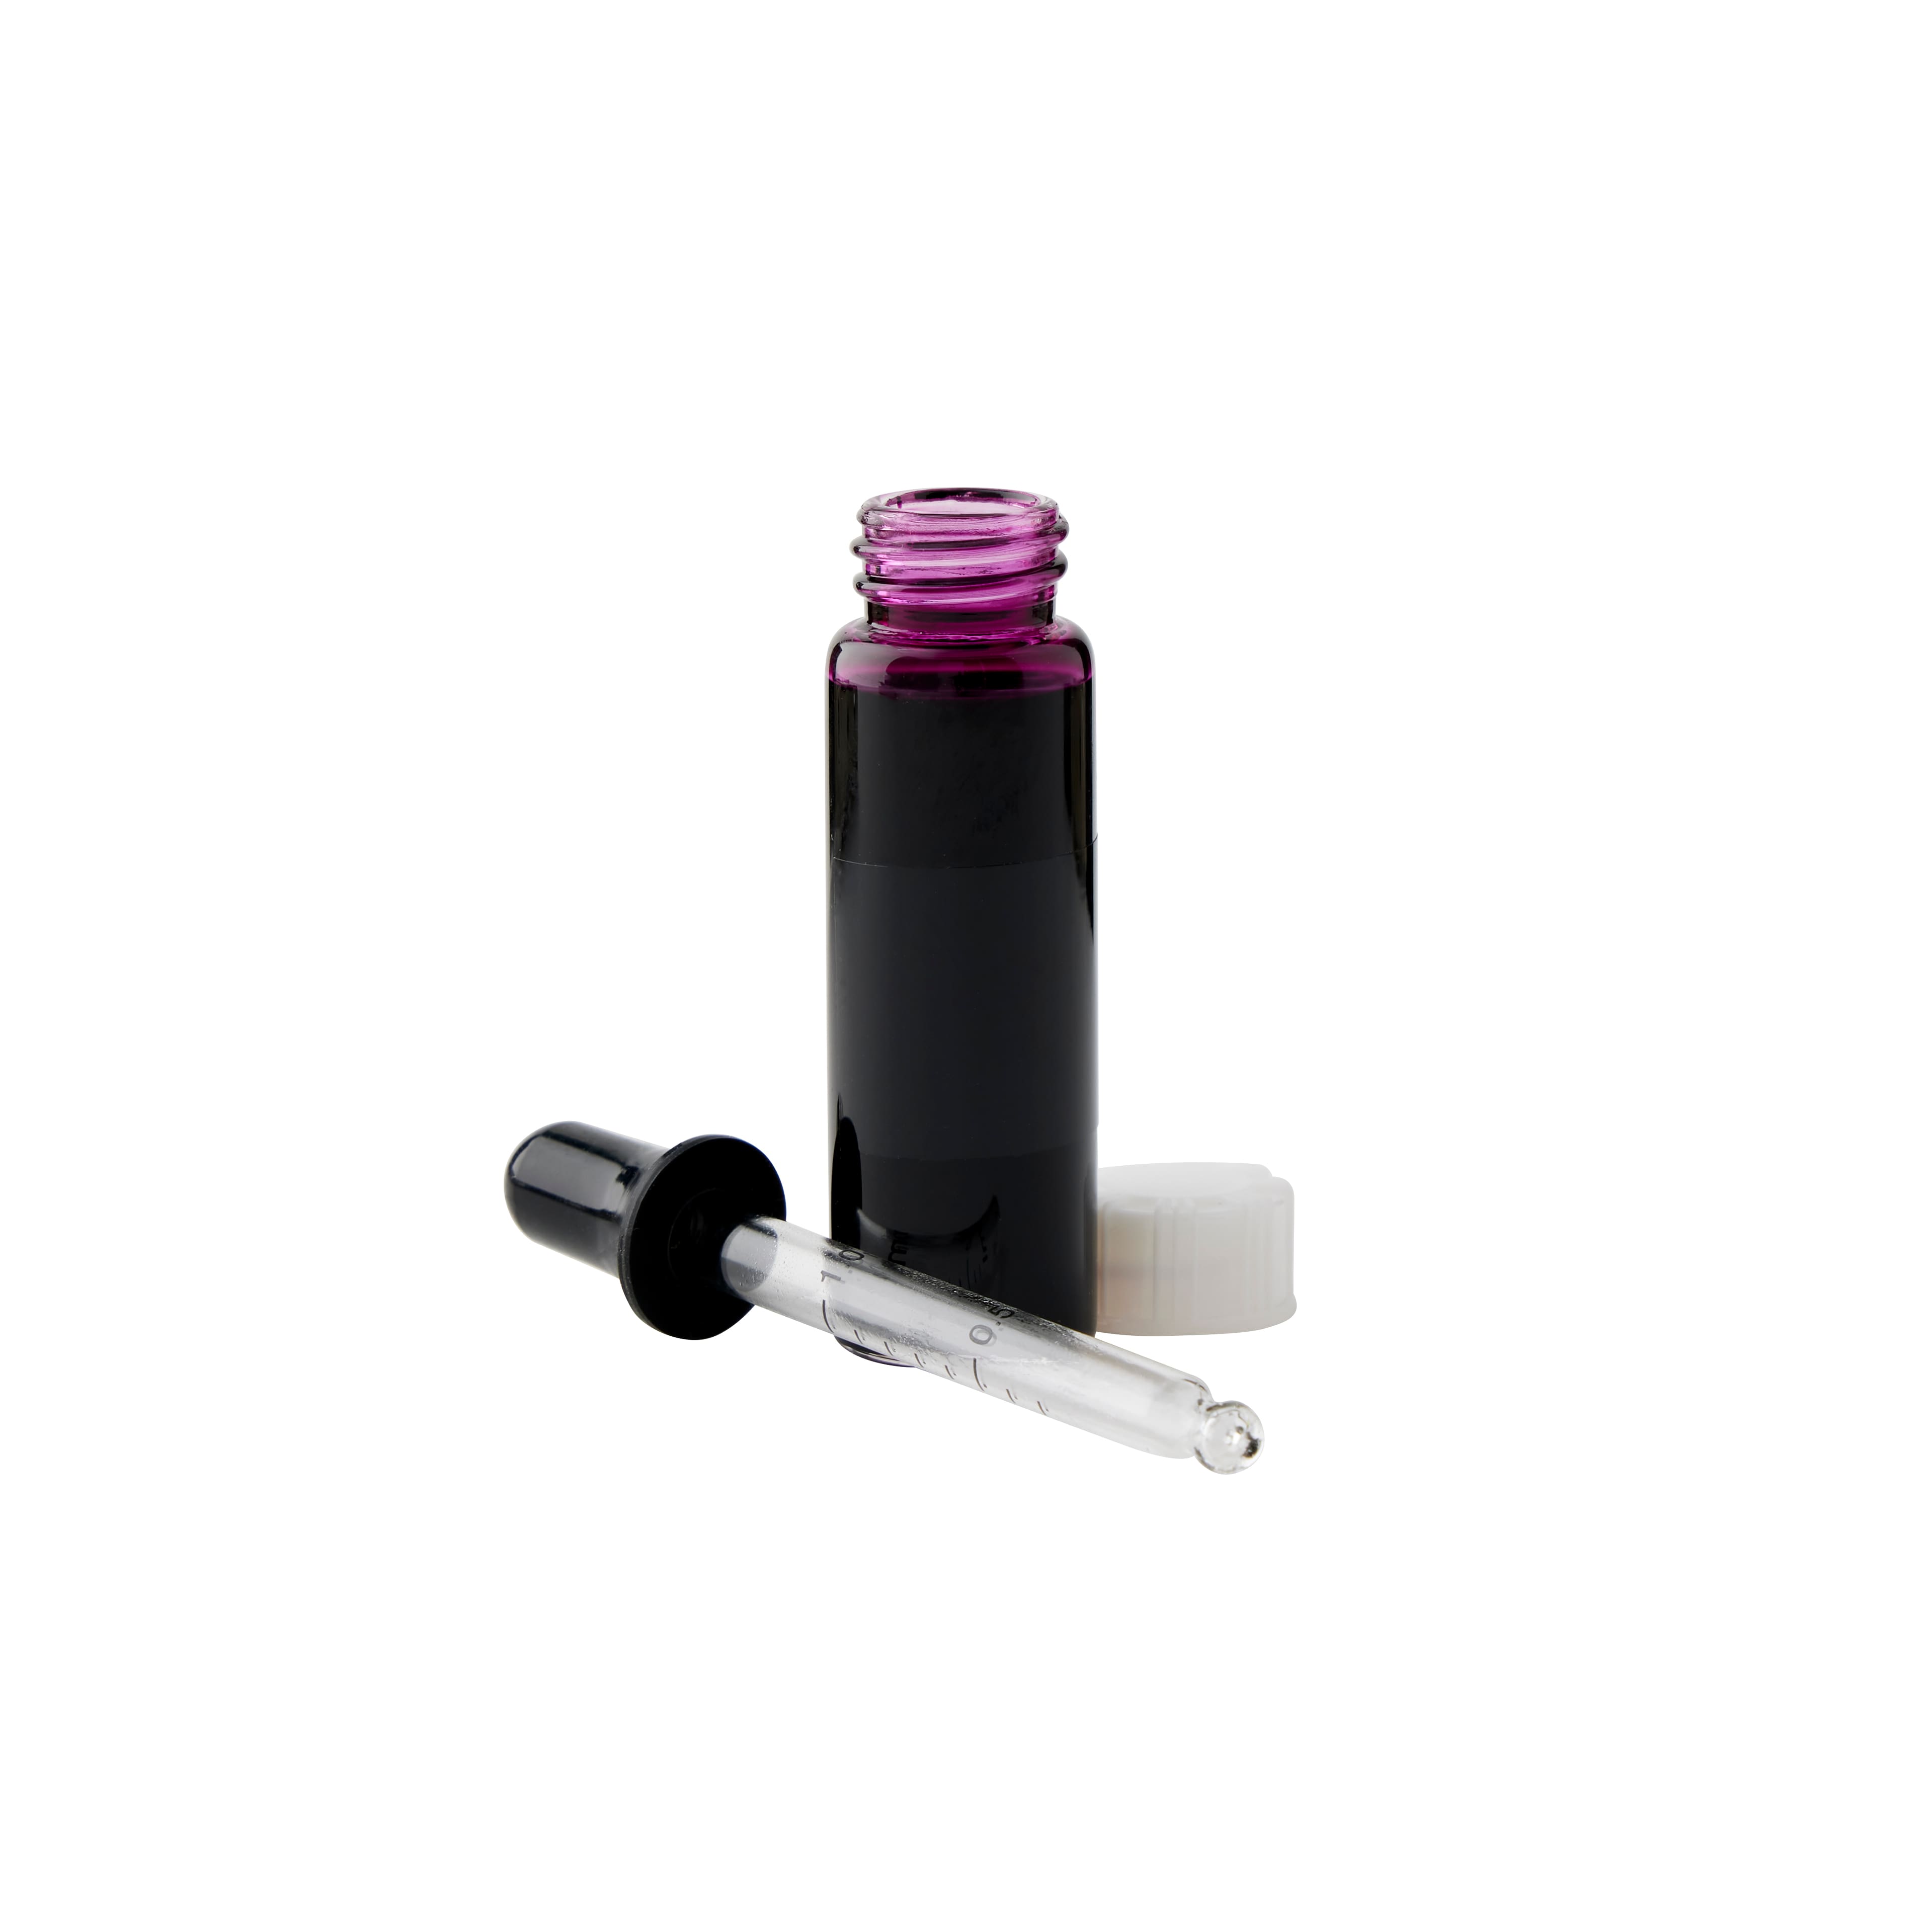 Teinture liquide tout usage Rit - Noir - 236 ml (8 oz) – Rit Dye Canada